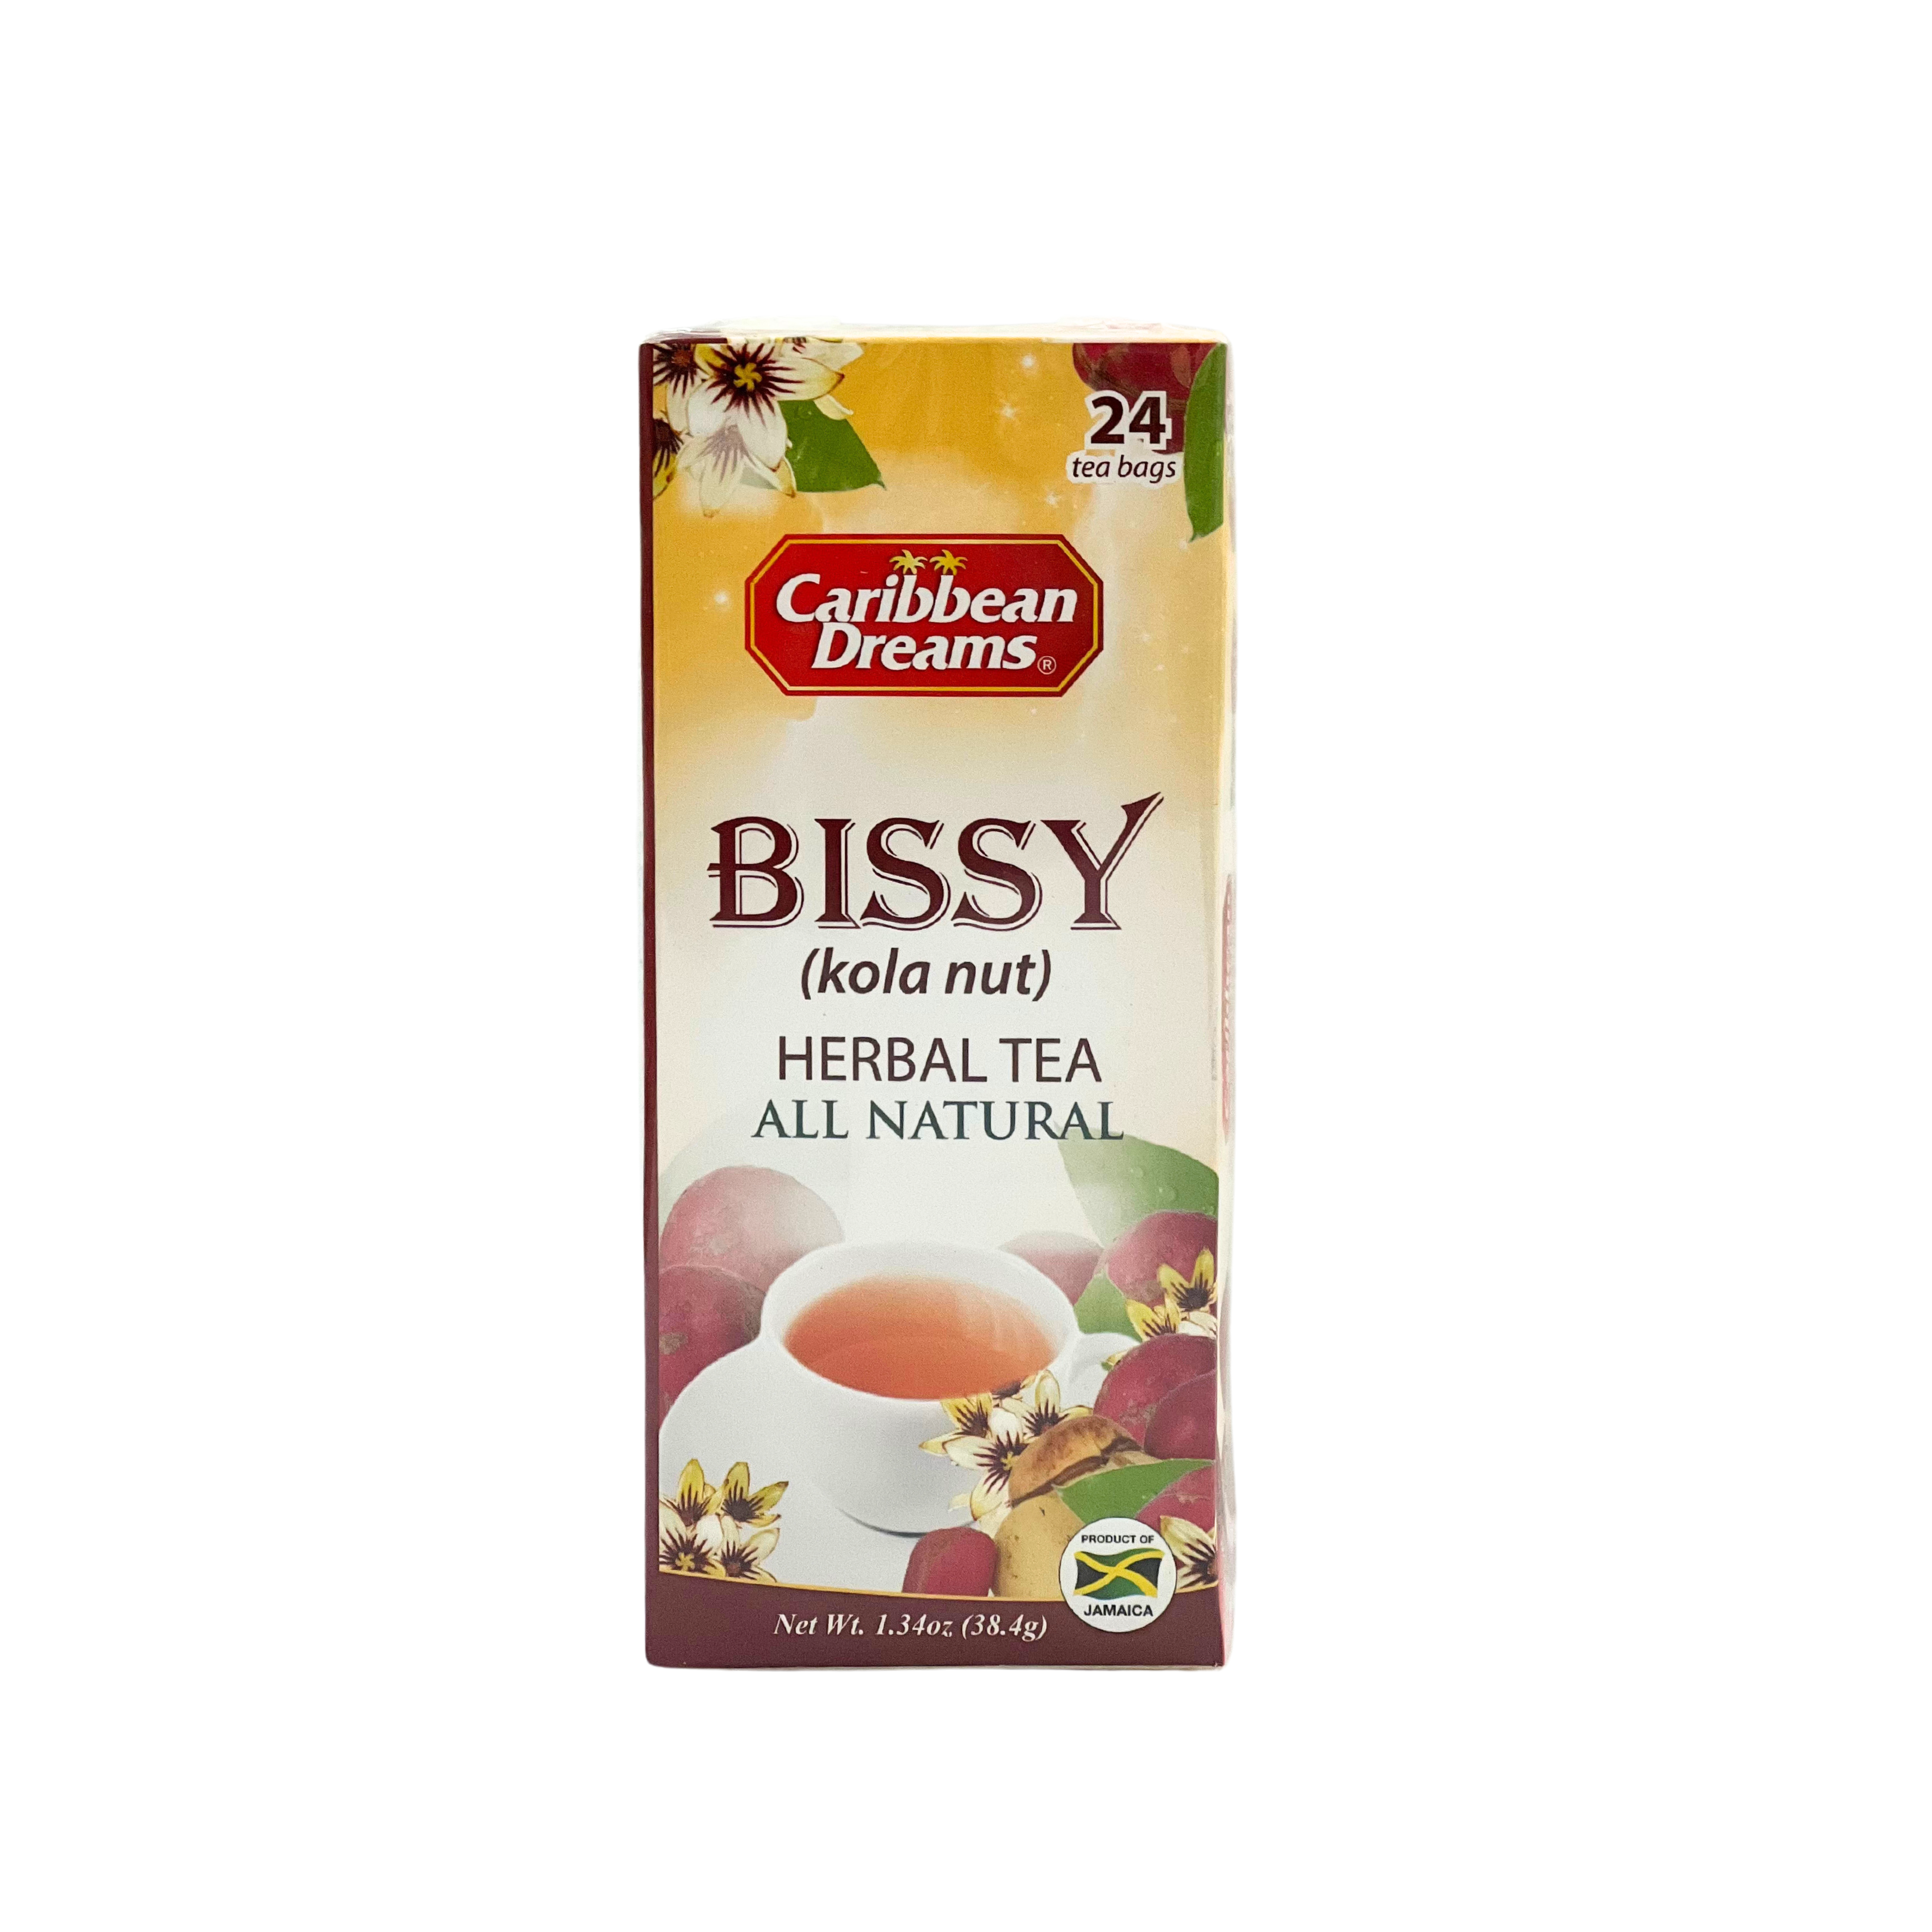 Cd Bissy Tea 24 bags